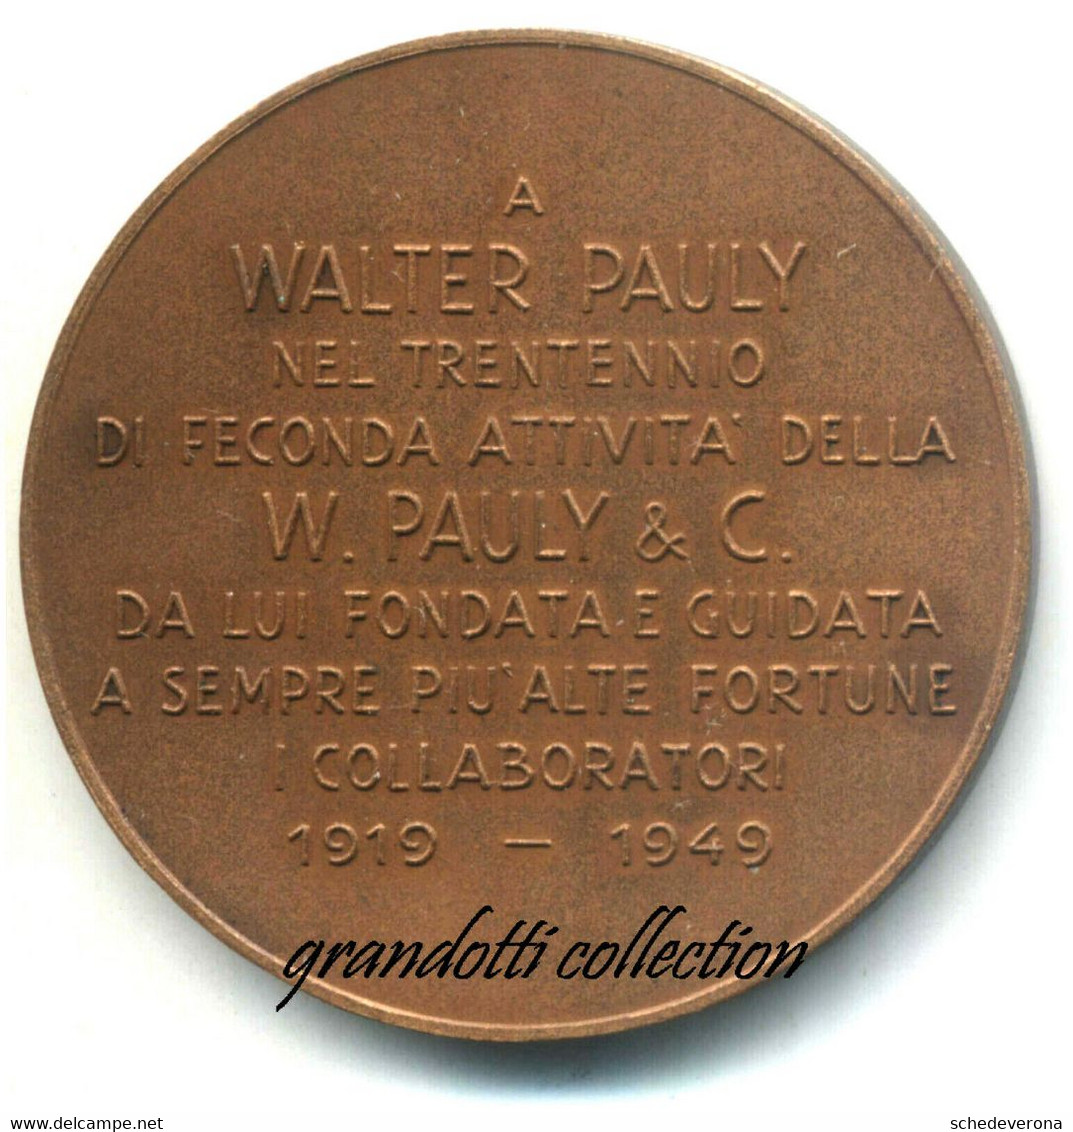 A WALTER PAULY I COLLABORATORI 30° MEDAGLIA 1949 EMILIO MONTI - Profesionales/De Sociedad